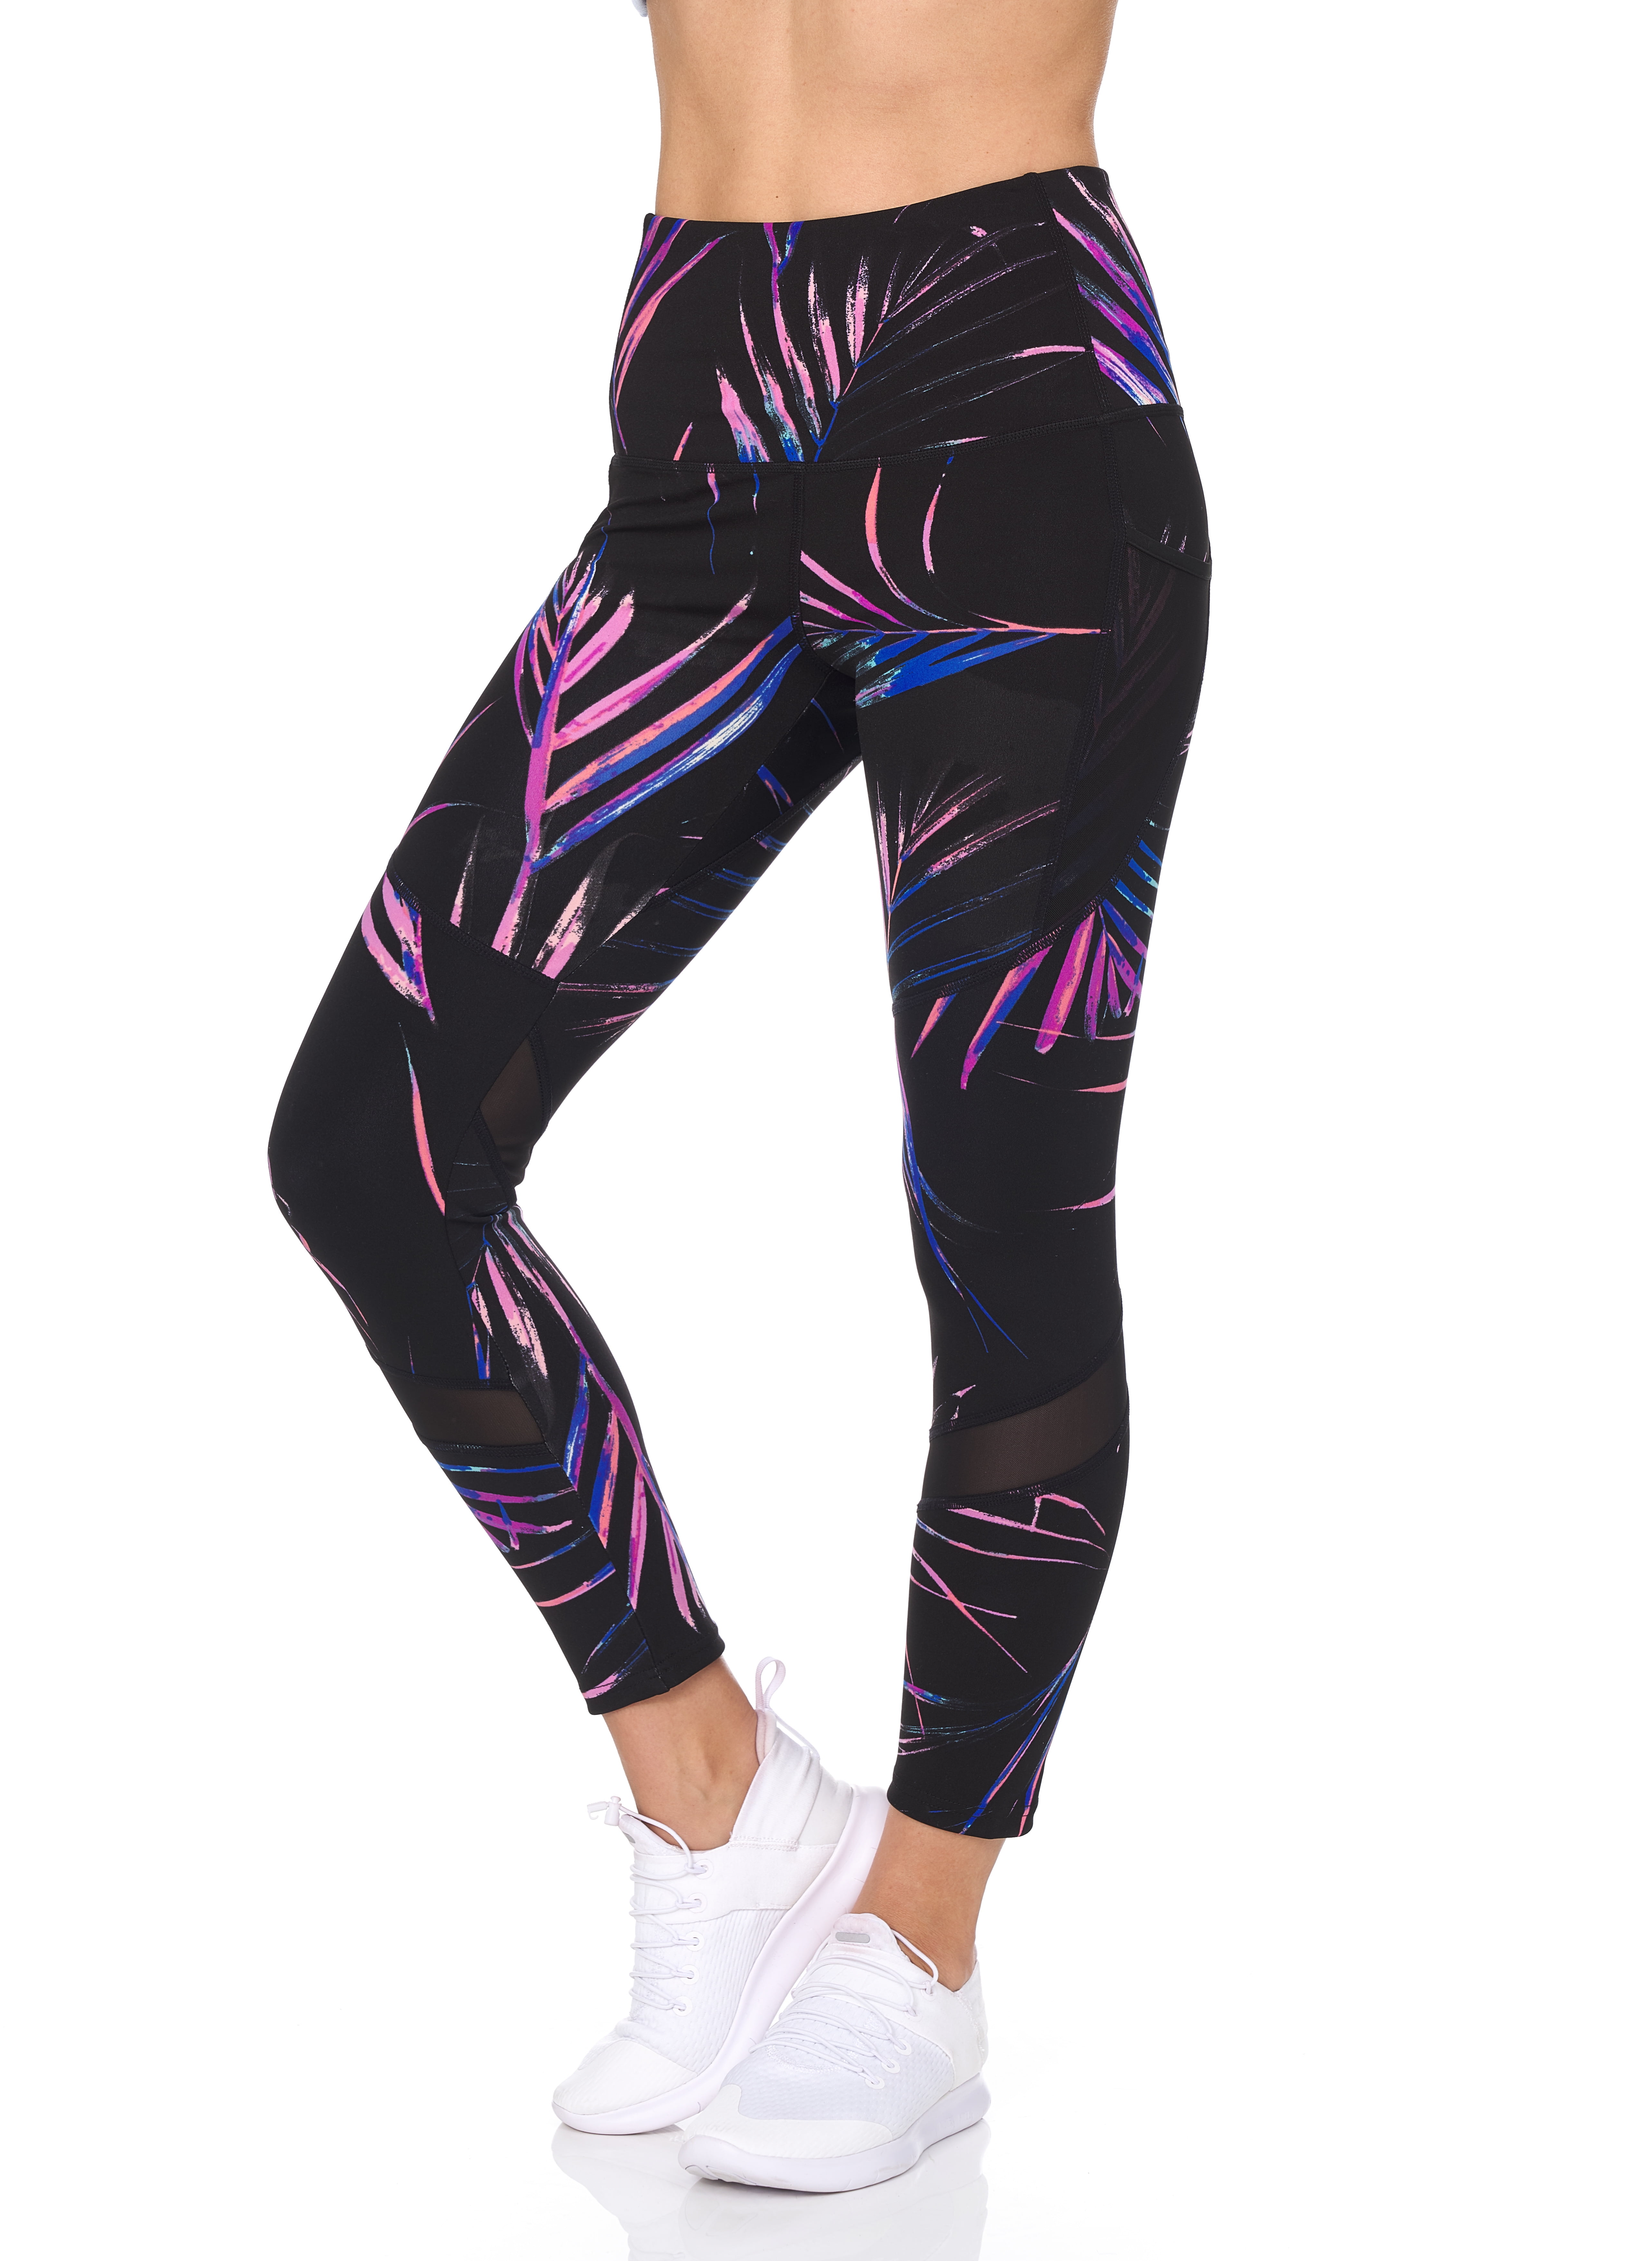 Nike, Pants & Jumpsuits, Nike Pro Leggings 78 Training Tights Pink Velvet  Waist Womens Small